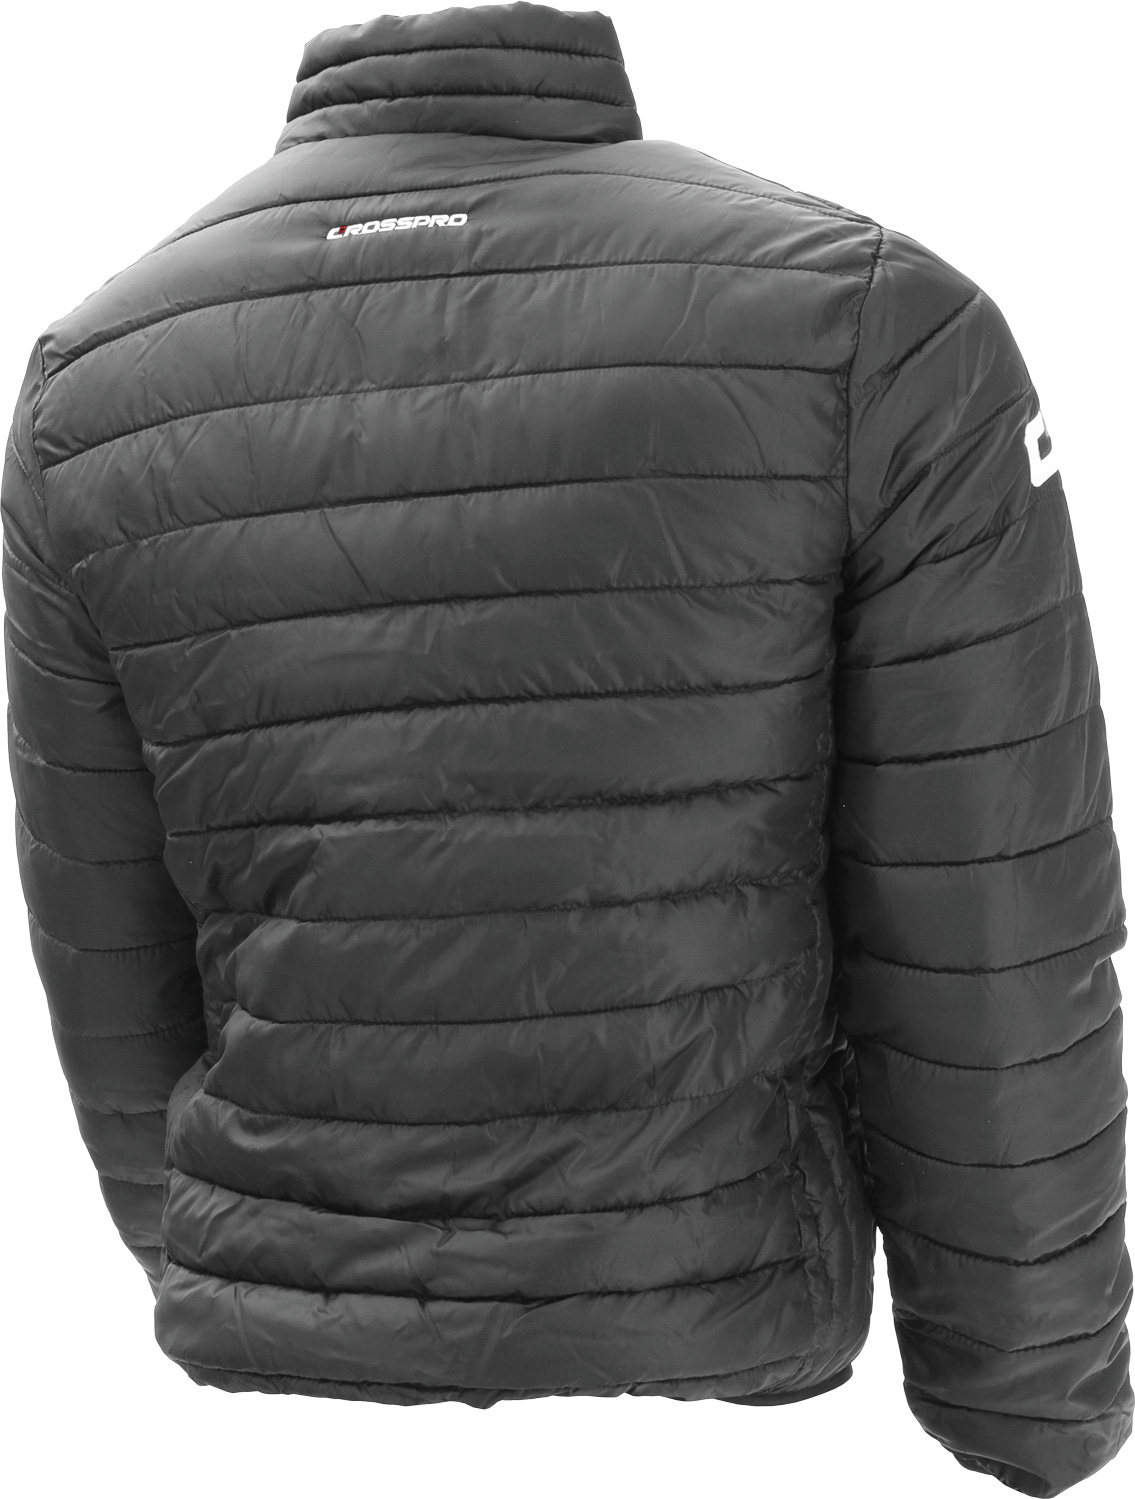 2CP1210011_1.JPG - CrossPro Jacket Finland (XL) Black